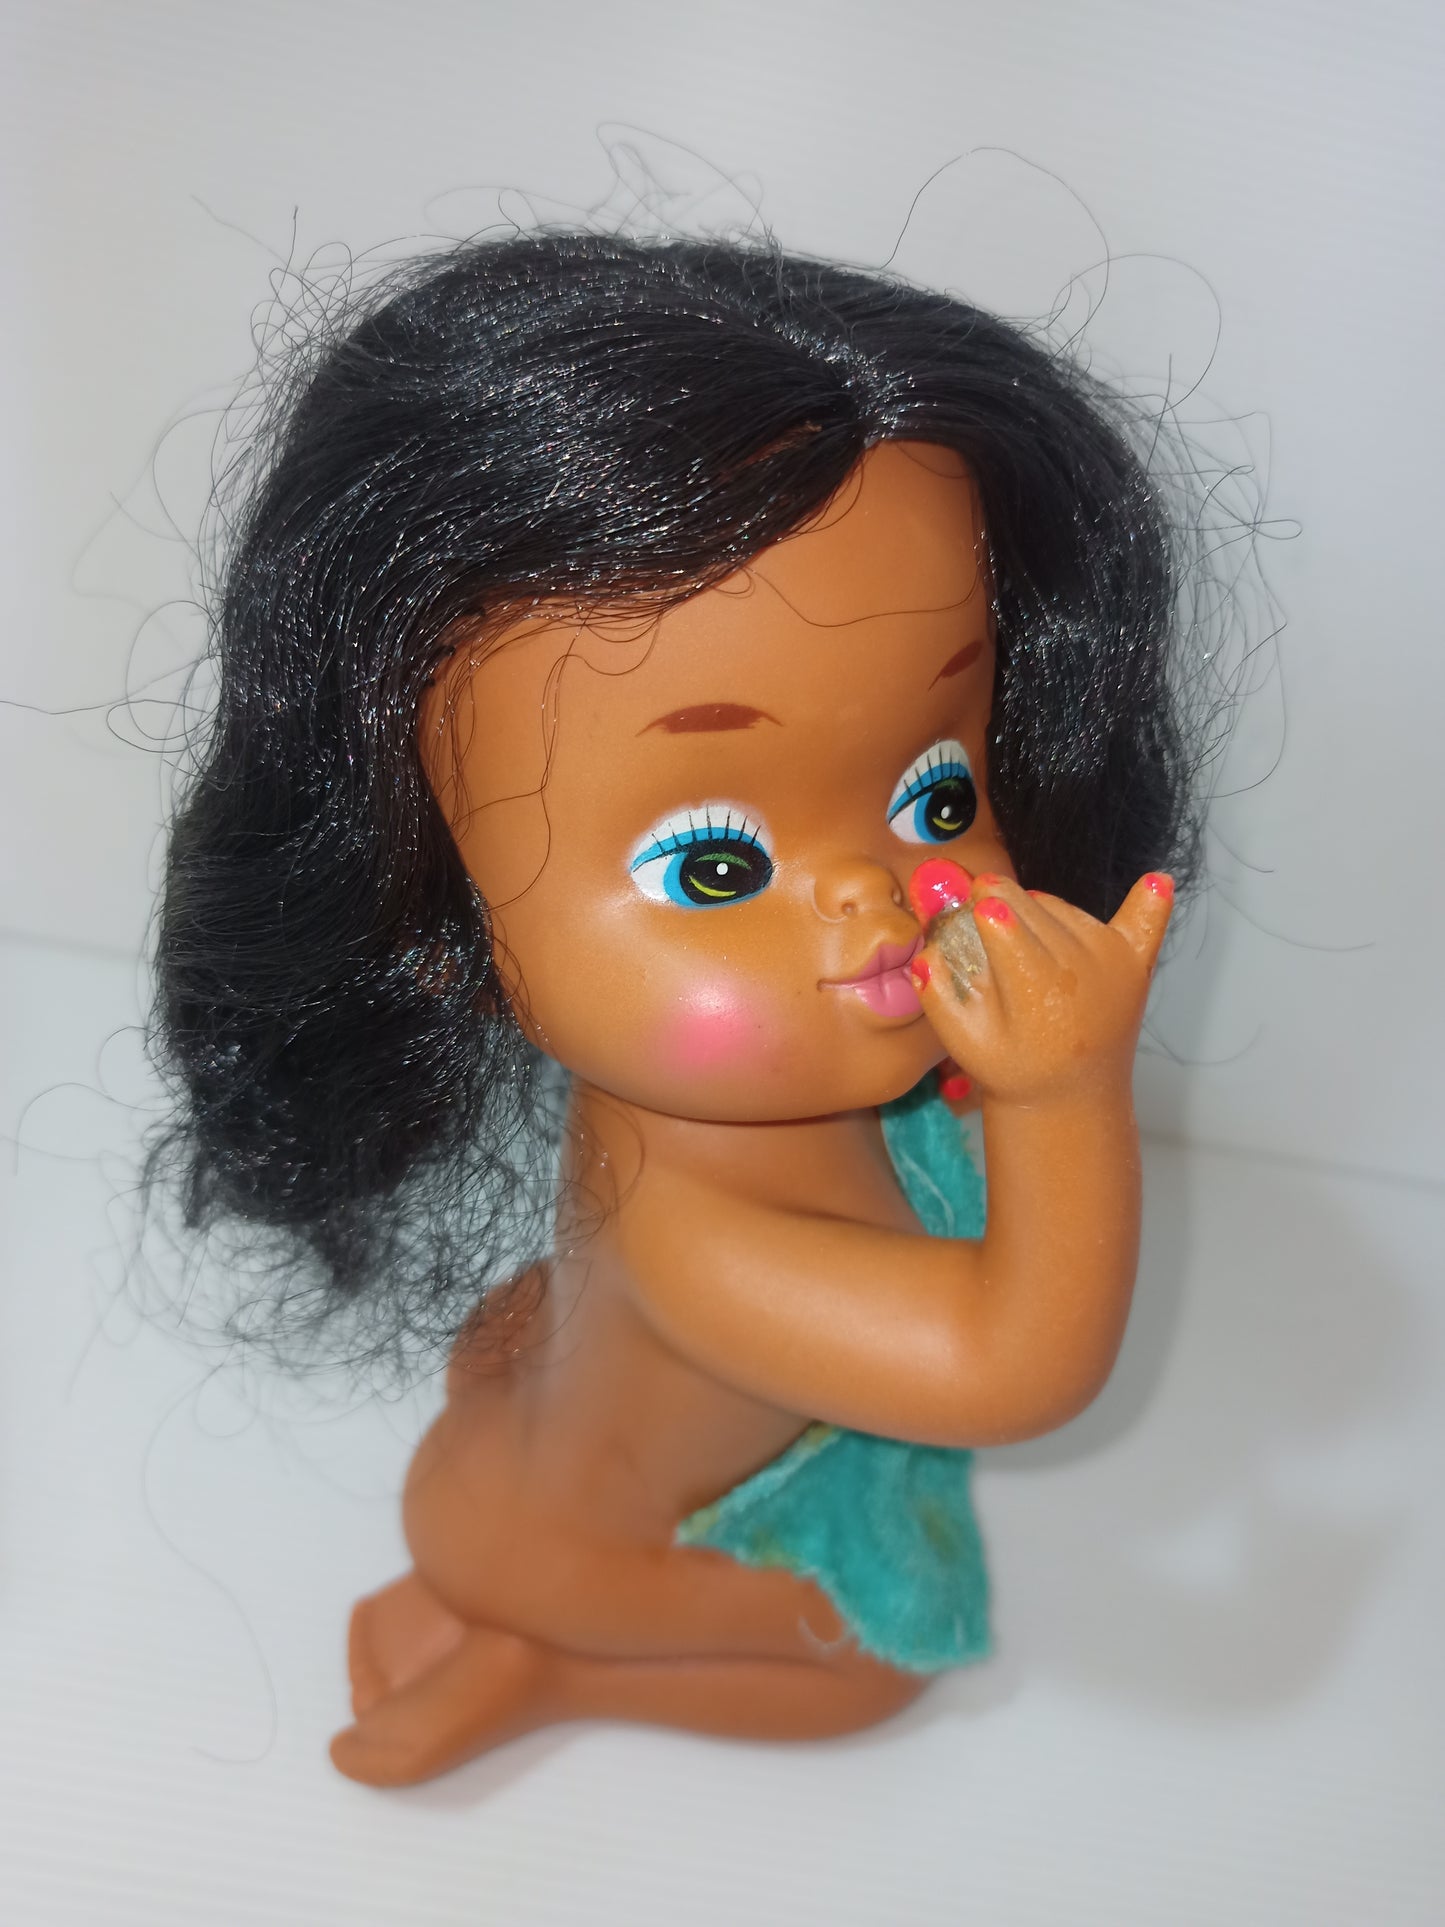 Hawaiian doll from the 60s-70s, made in Hong Kong